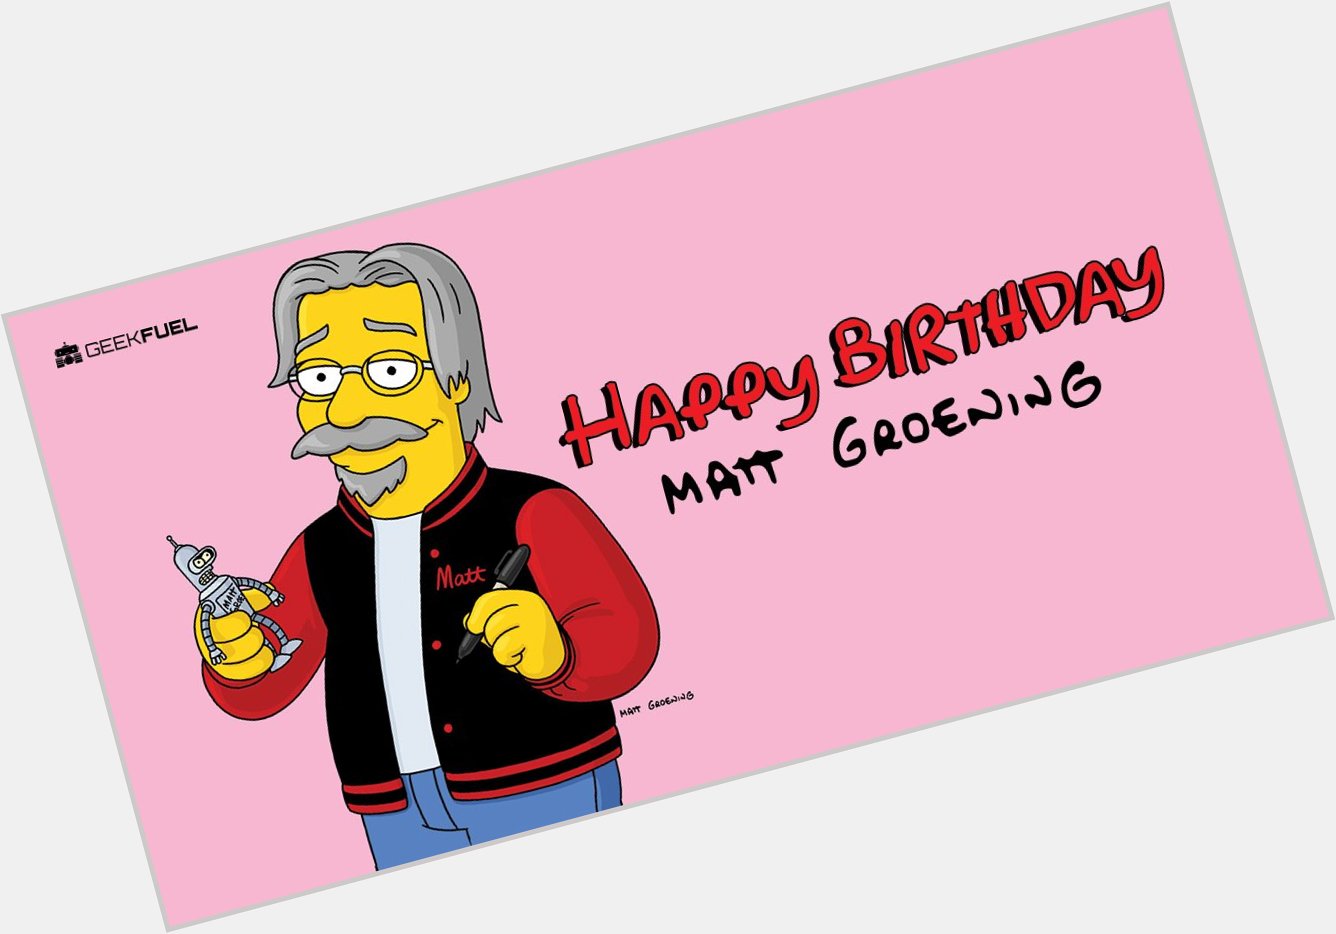 Big Happy Birthday hug to Matt Groening. Thanks for the chuckles! 